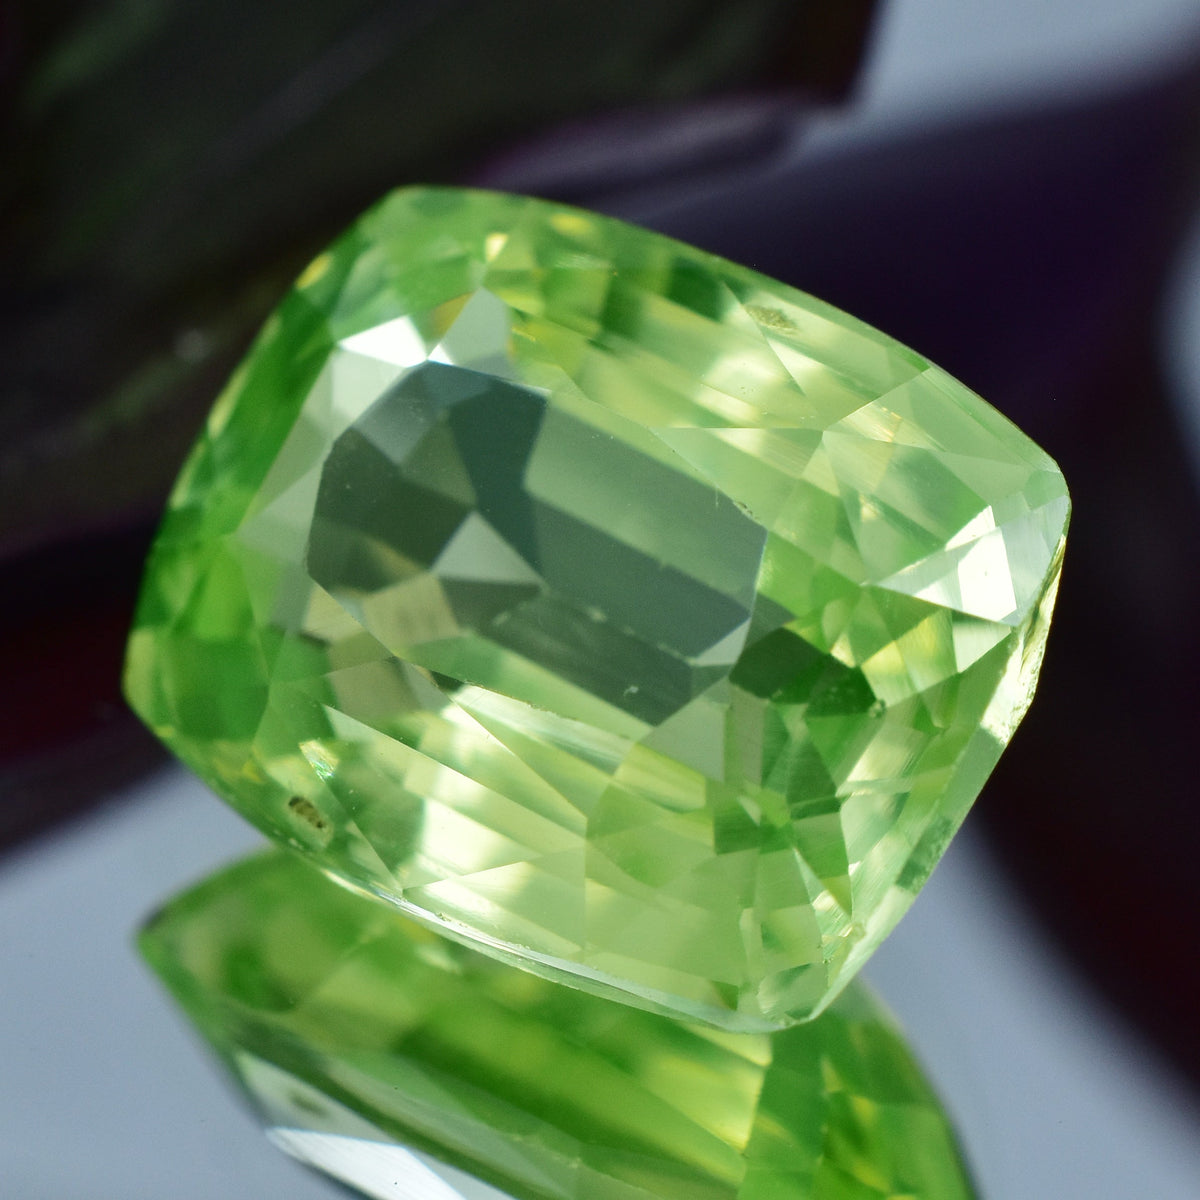 Sapphire Gemstone 8.80 Carat Cushion Cut Natural Bluish Green Color Certified Loose Gemstone Ring Size Gem